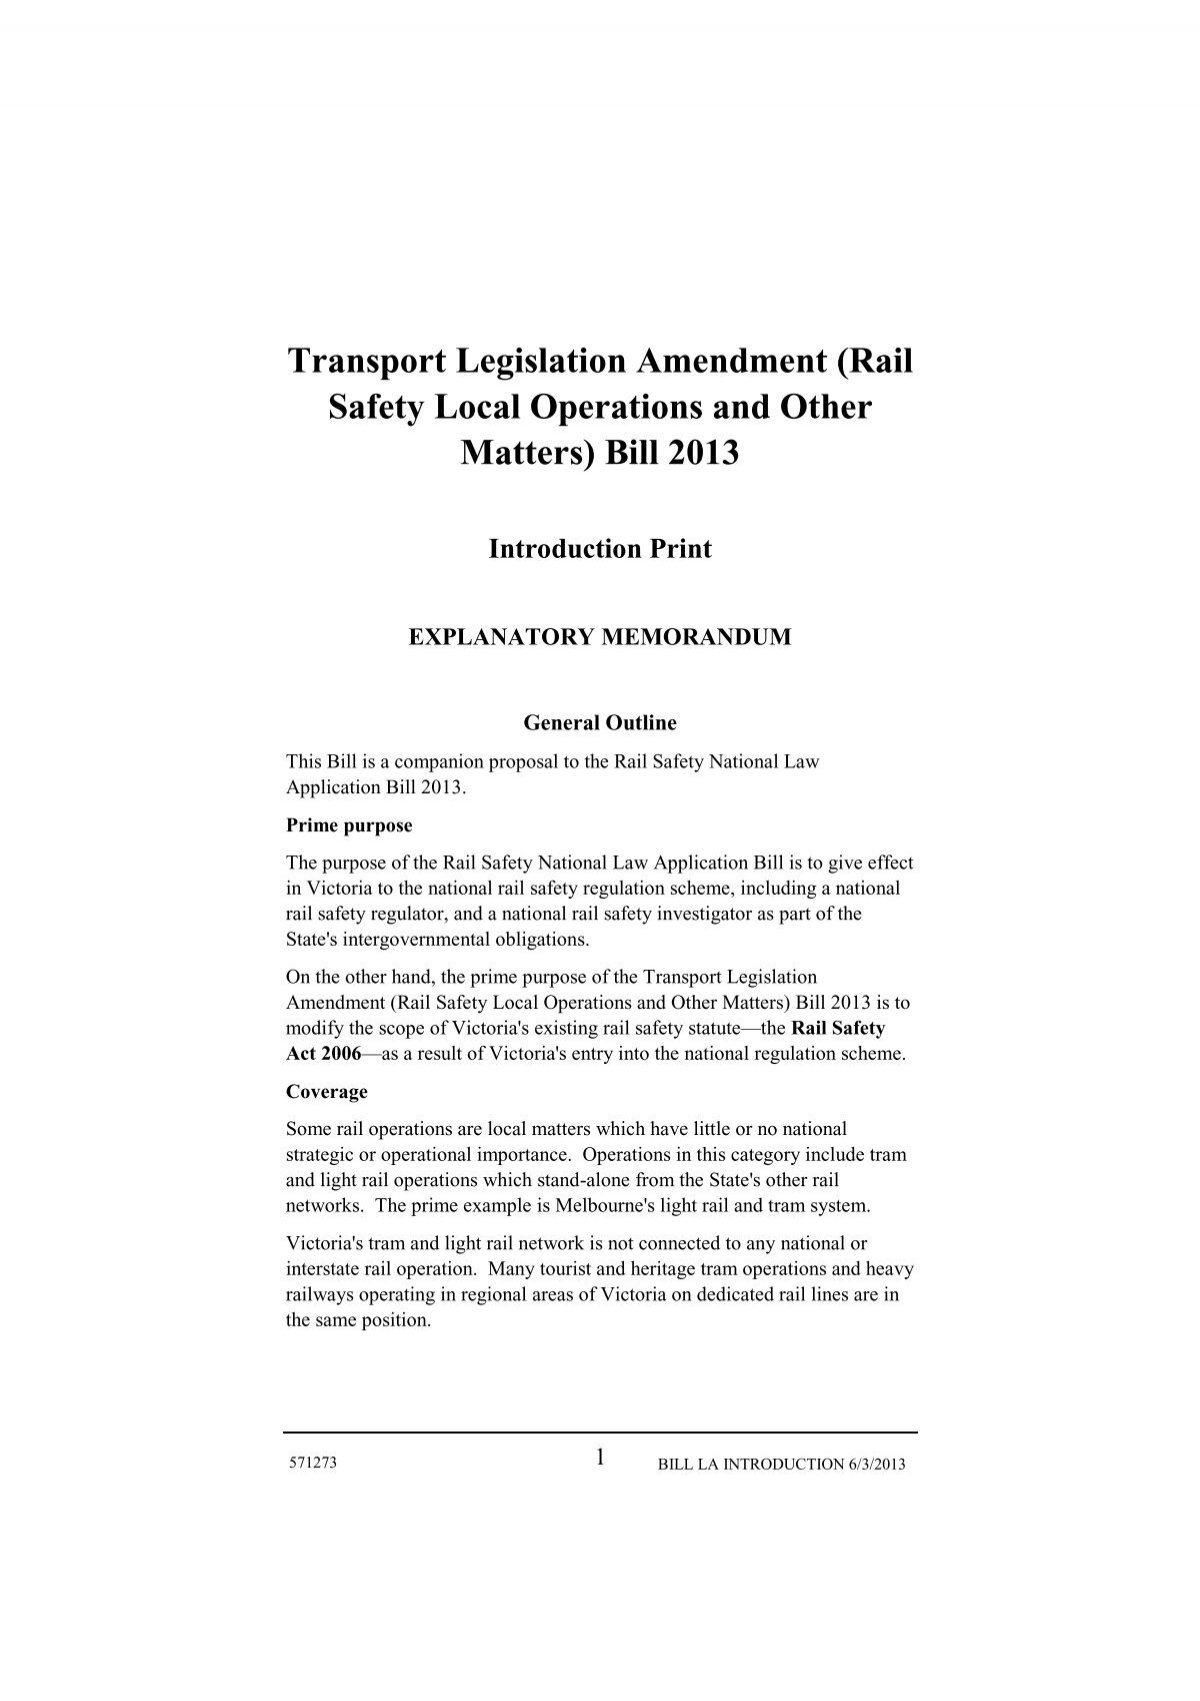 Transport Legislation Amendment (Rail Safety Local Operations and